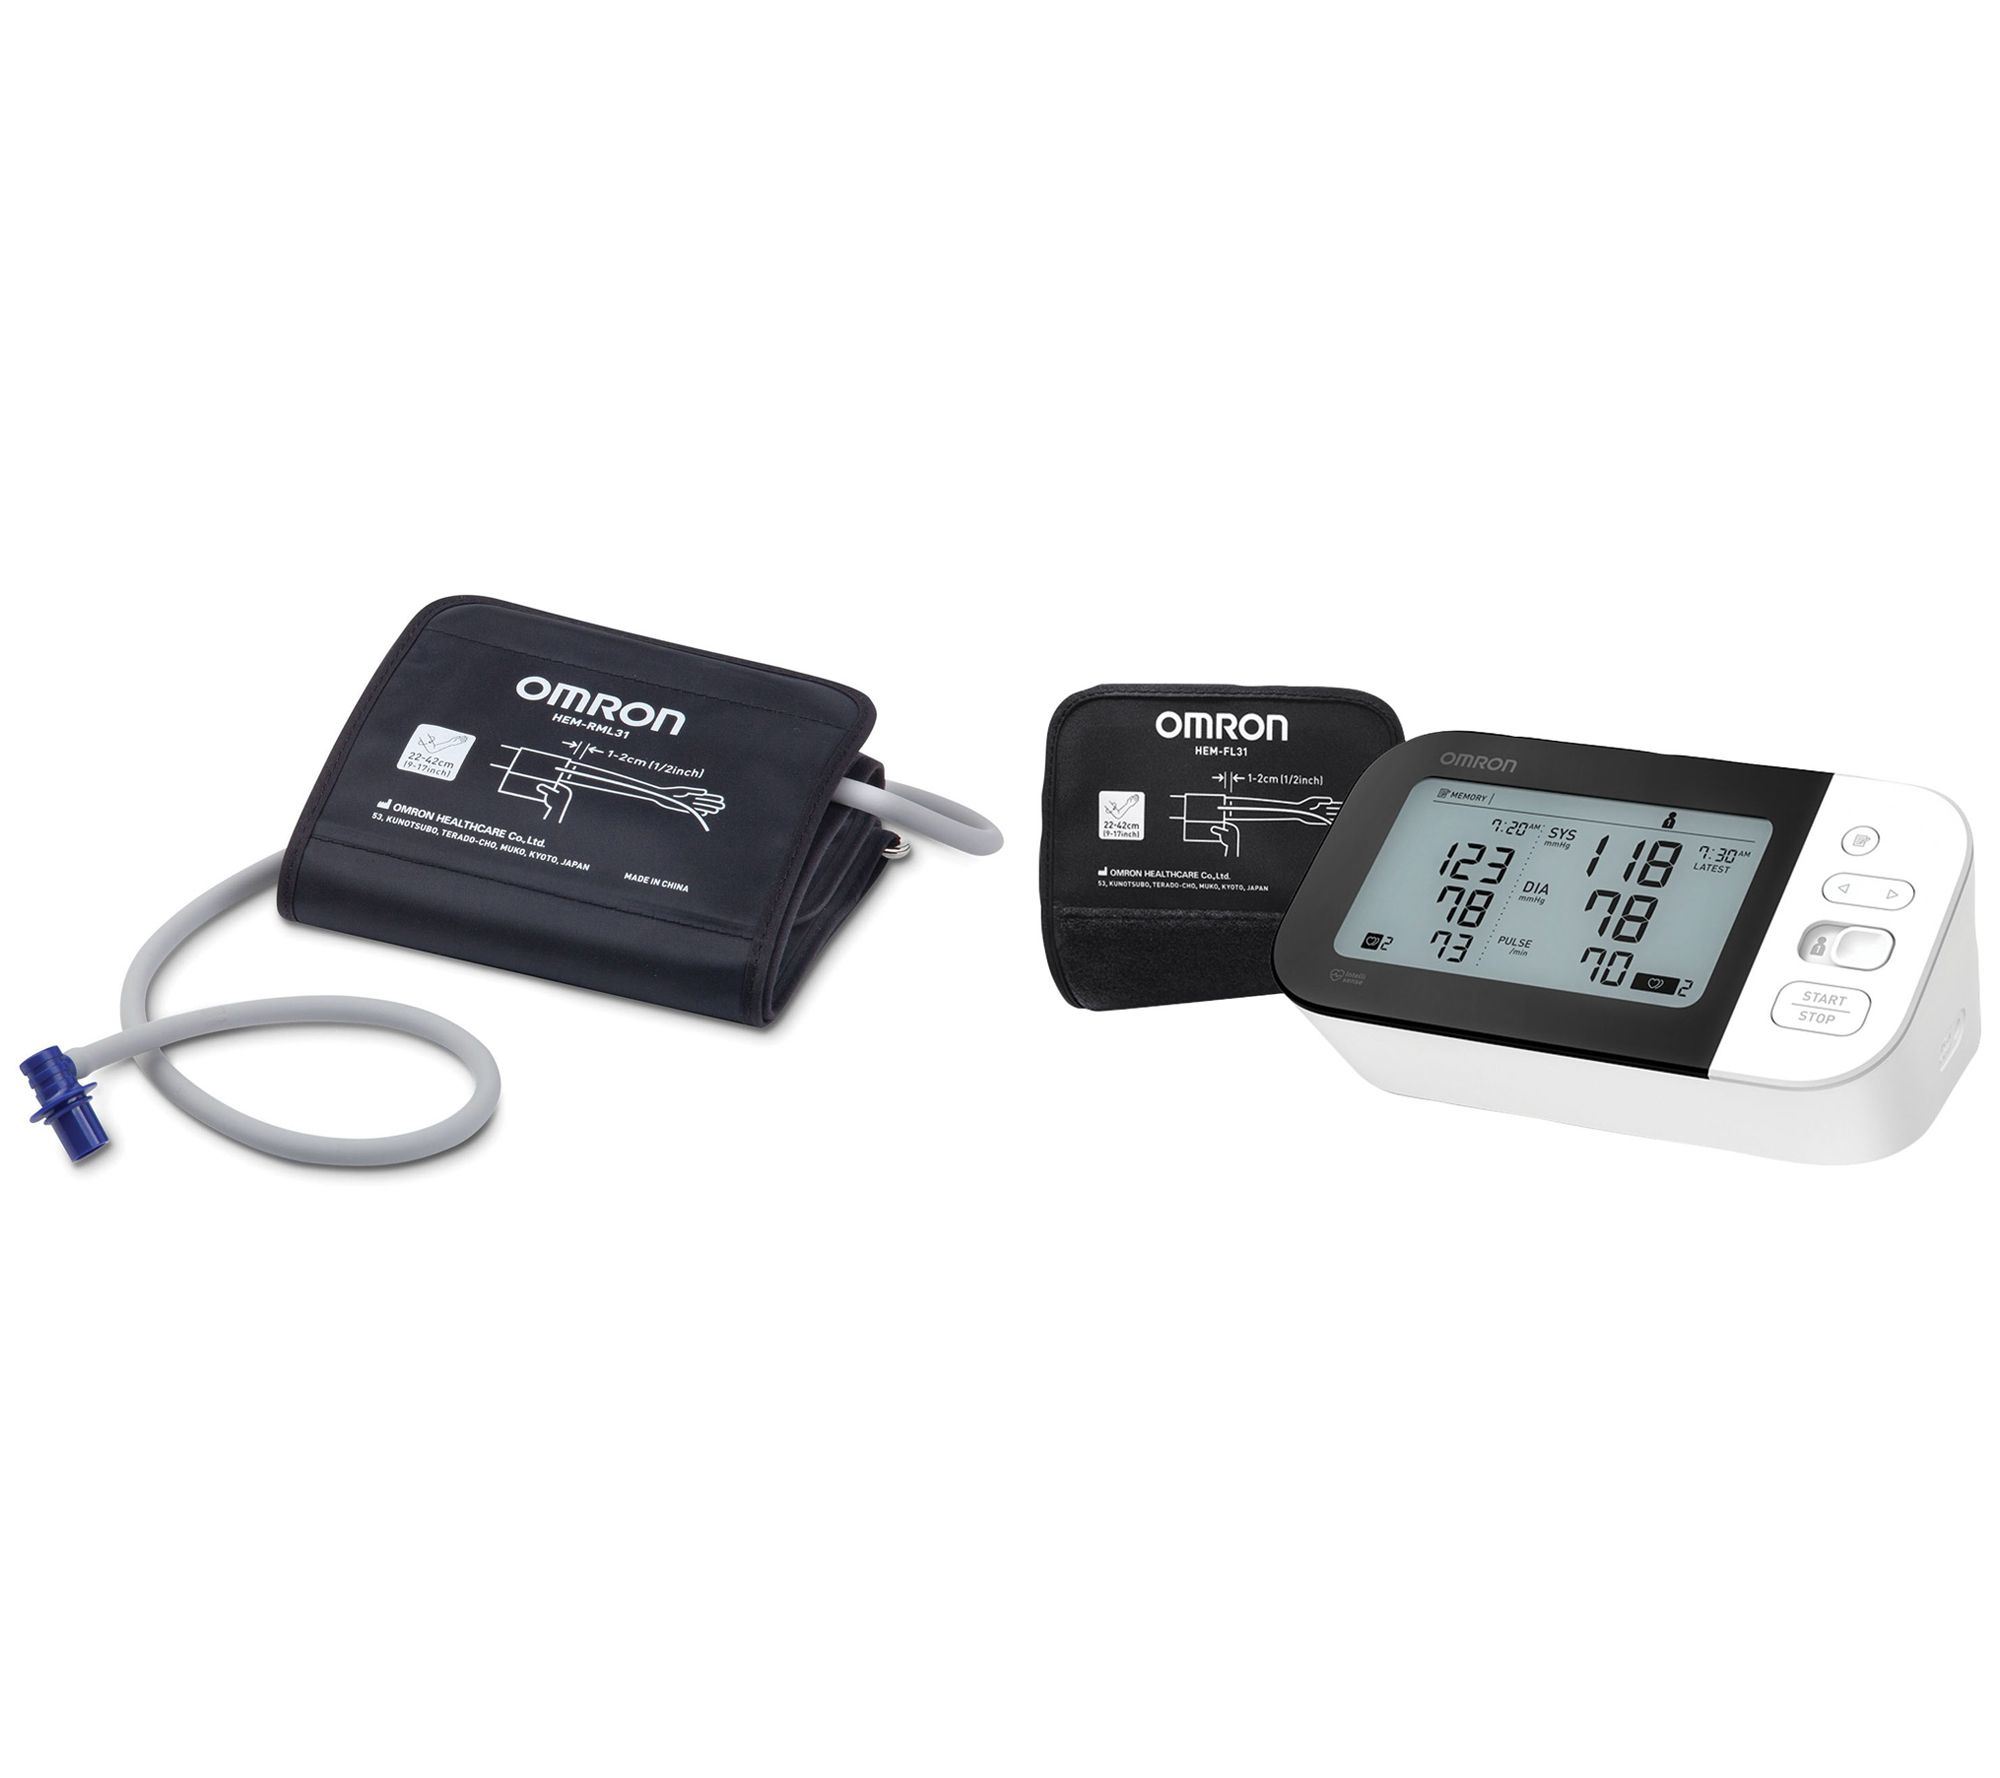 Omron 3 Series Blood Pressure Monitor 1 ct